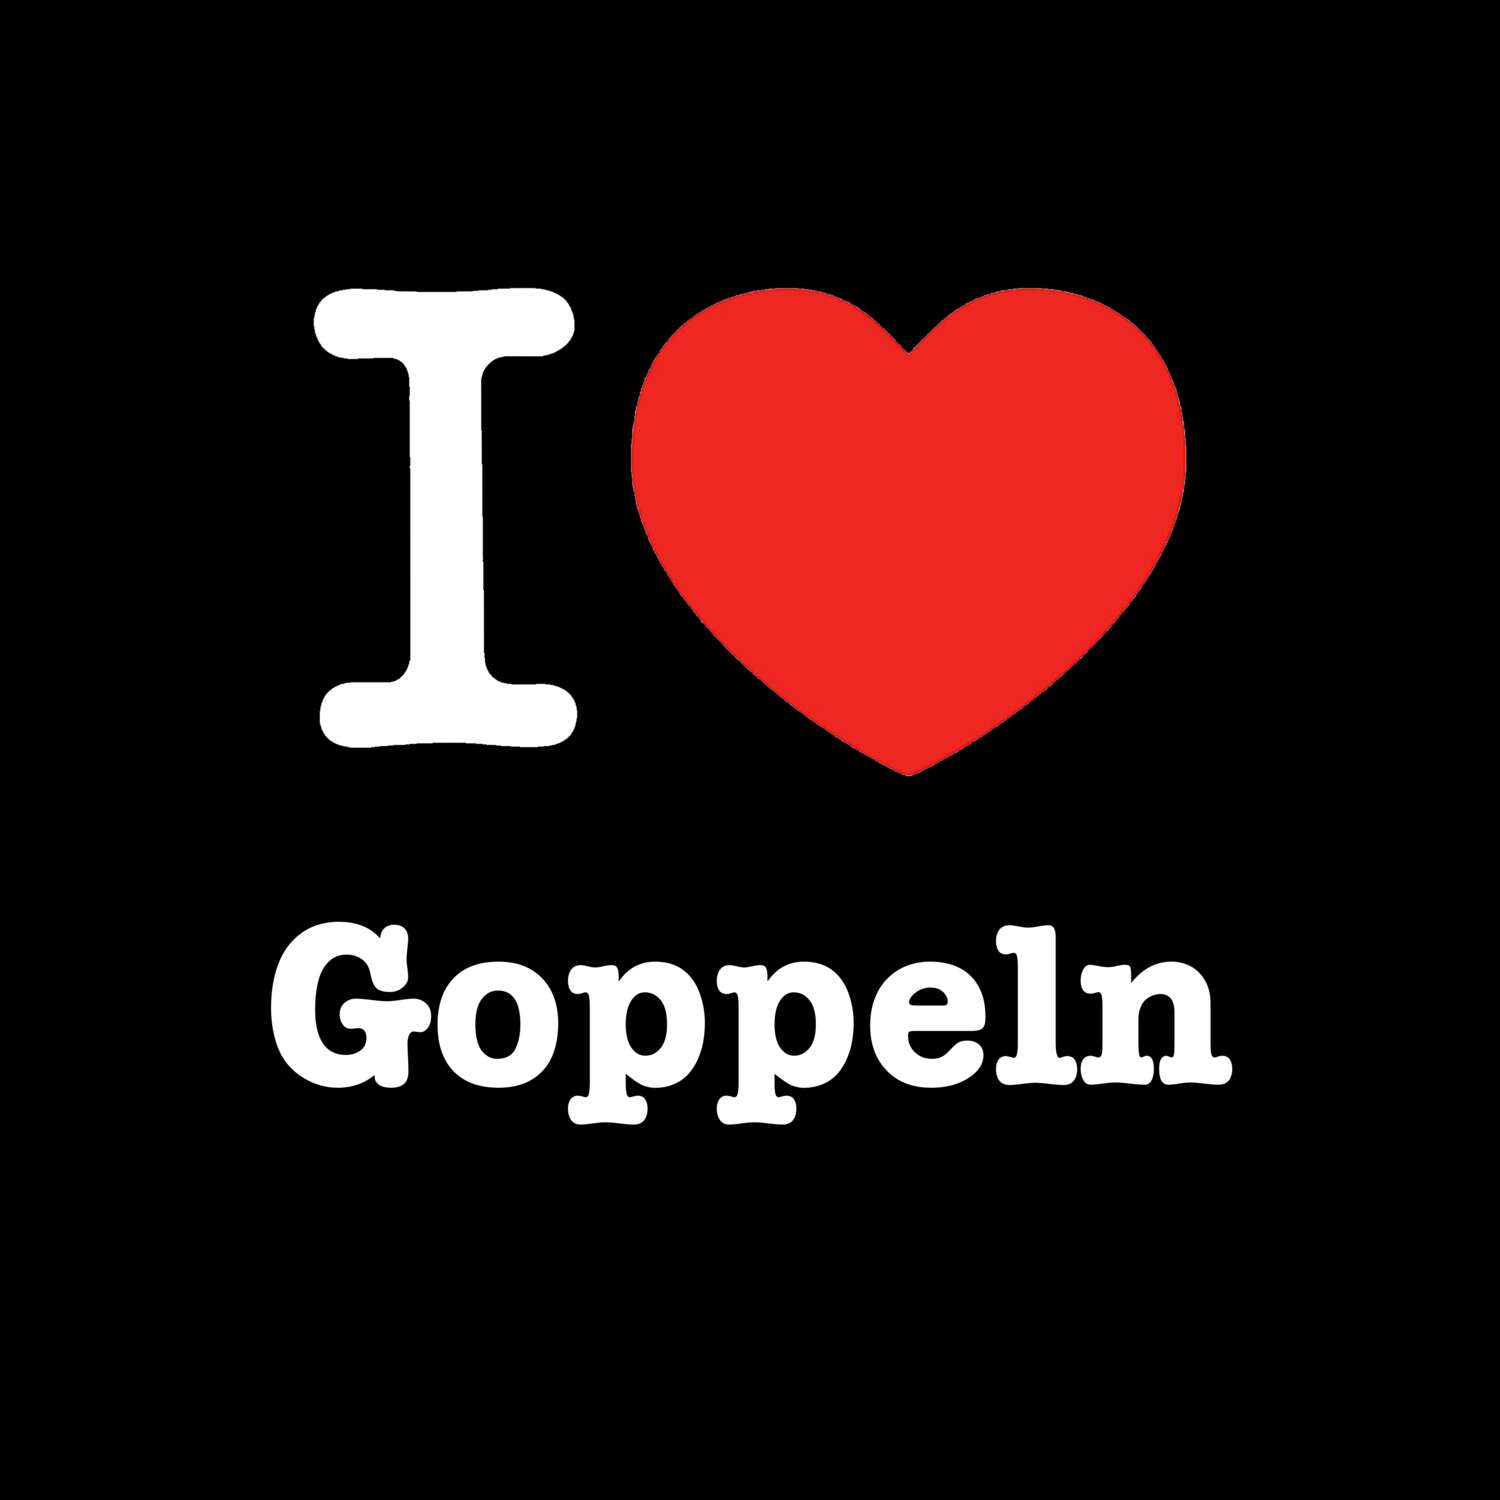 Goppeln T-Shirt »I love«